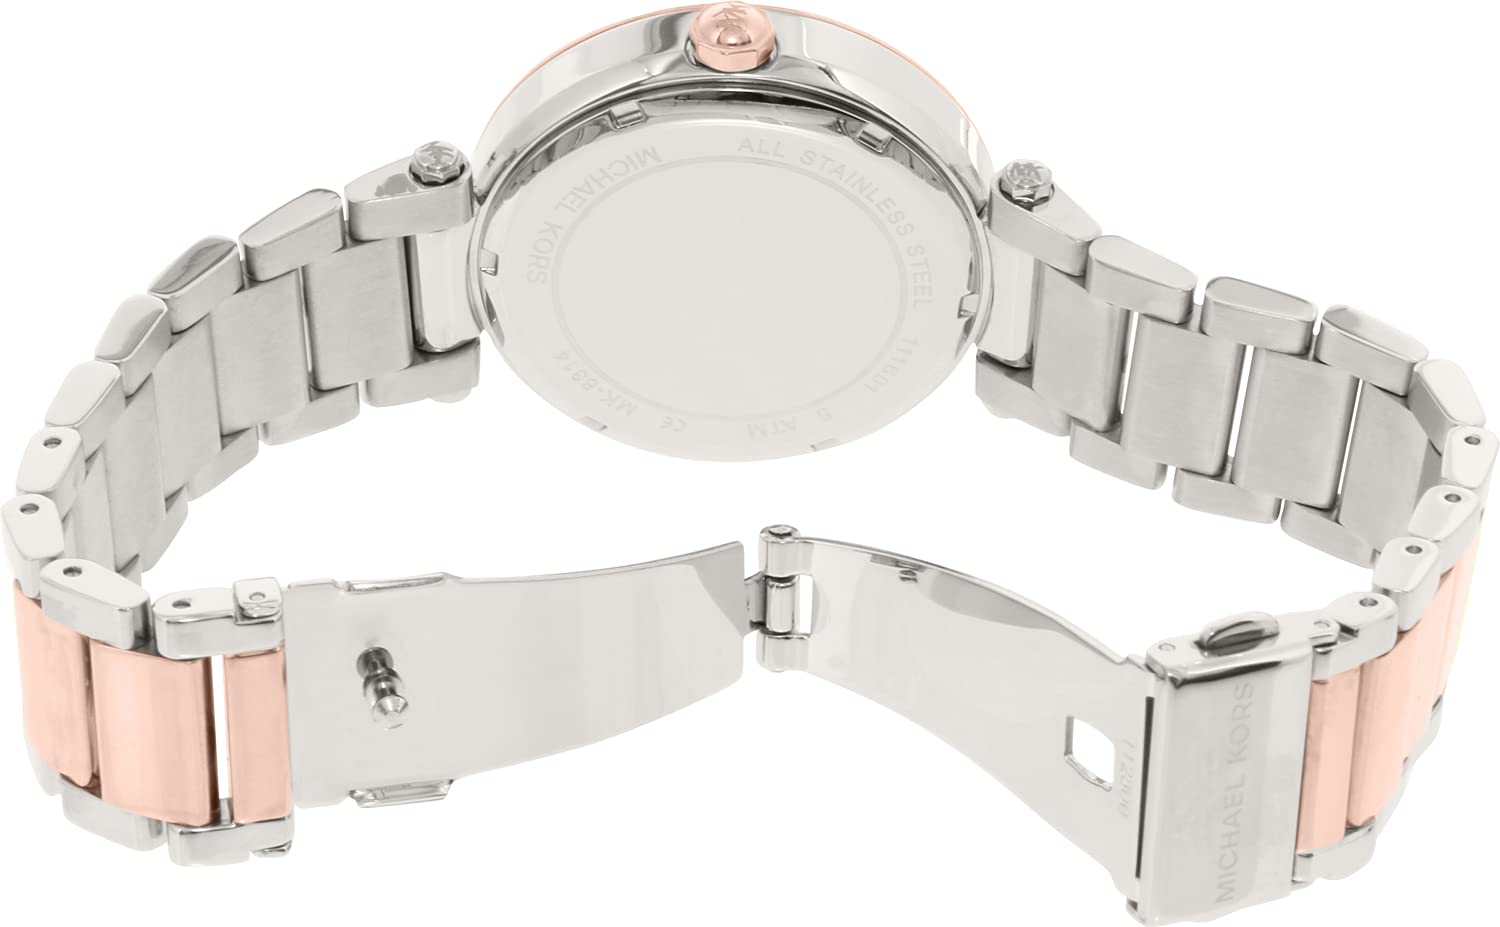 Michael Kors Women's Parker Two-Tone Watch MK6314